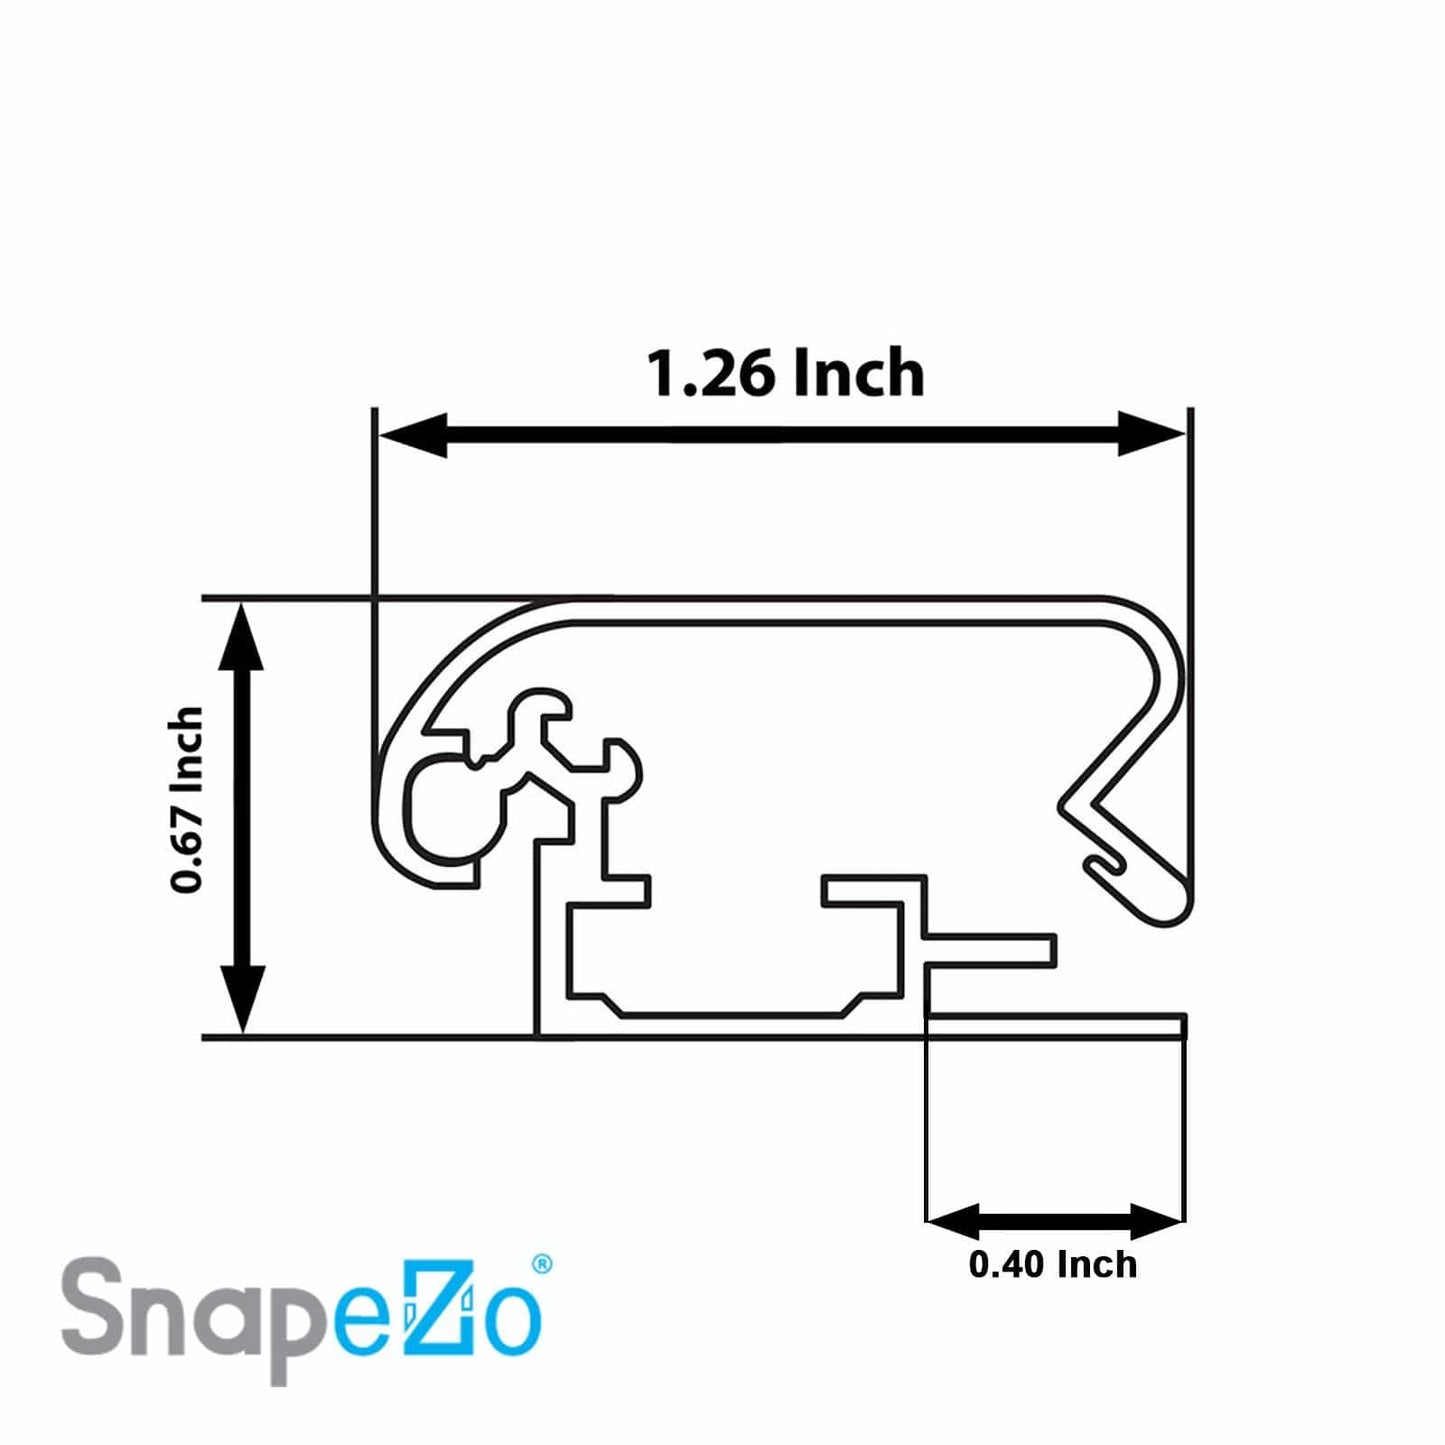 11x17 Silver SnapeZo® Jumbo - 1.25" Profile - Snap Frames Direct